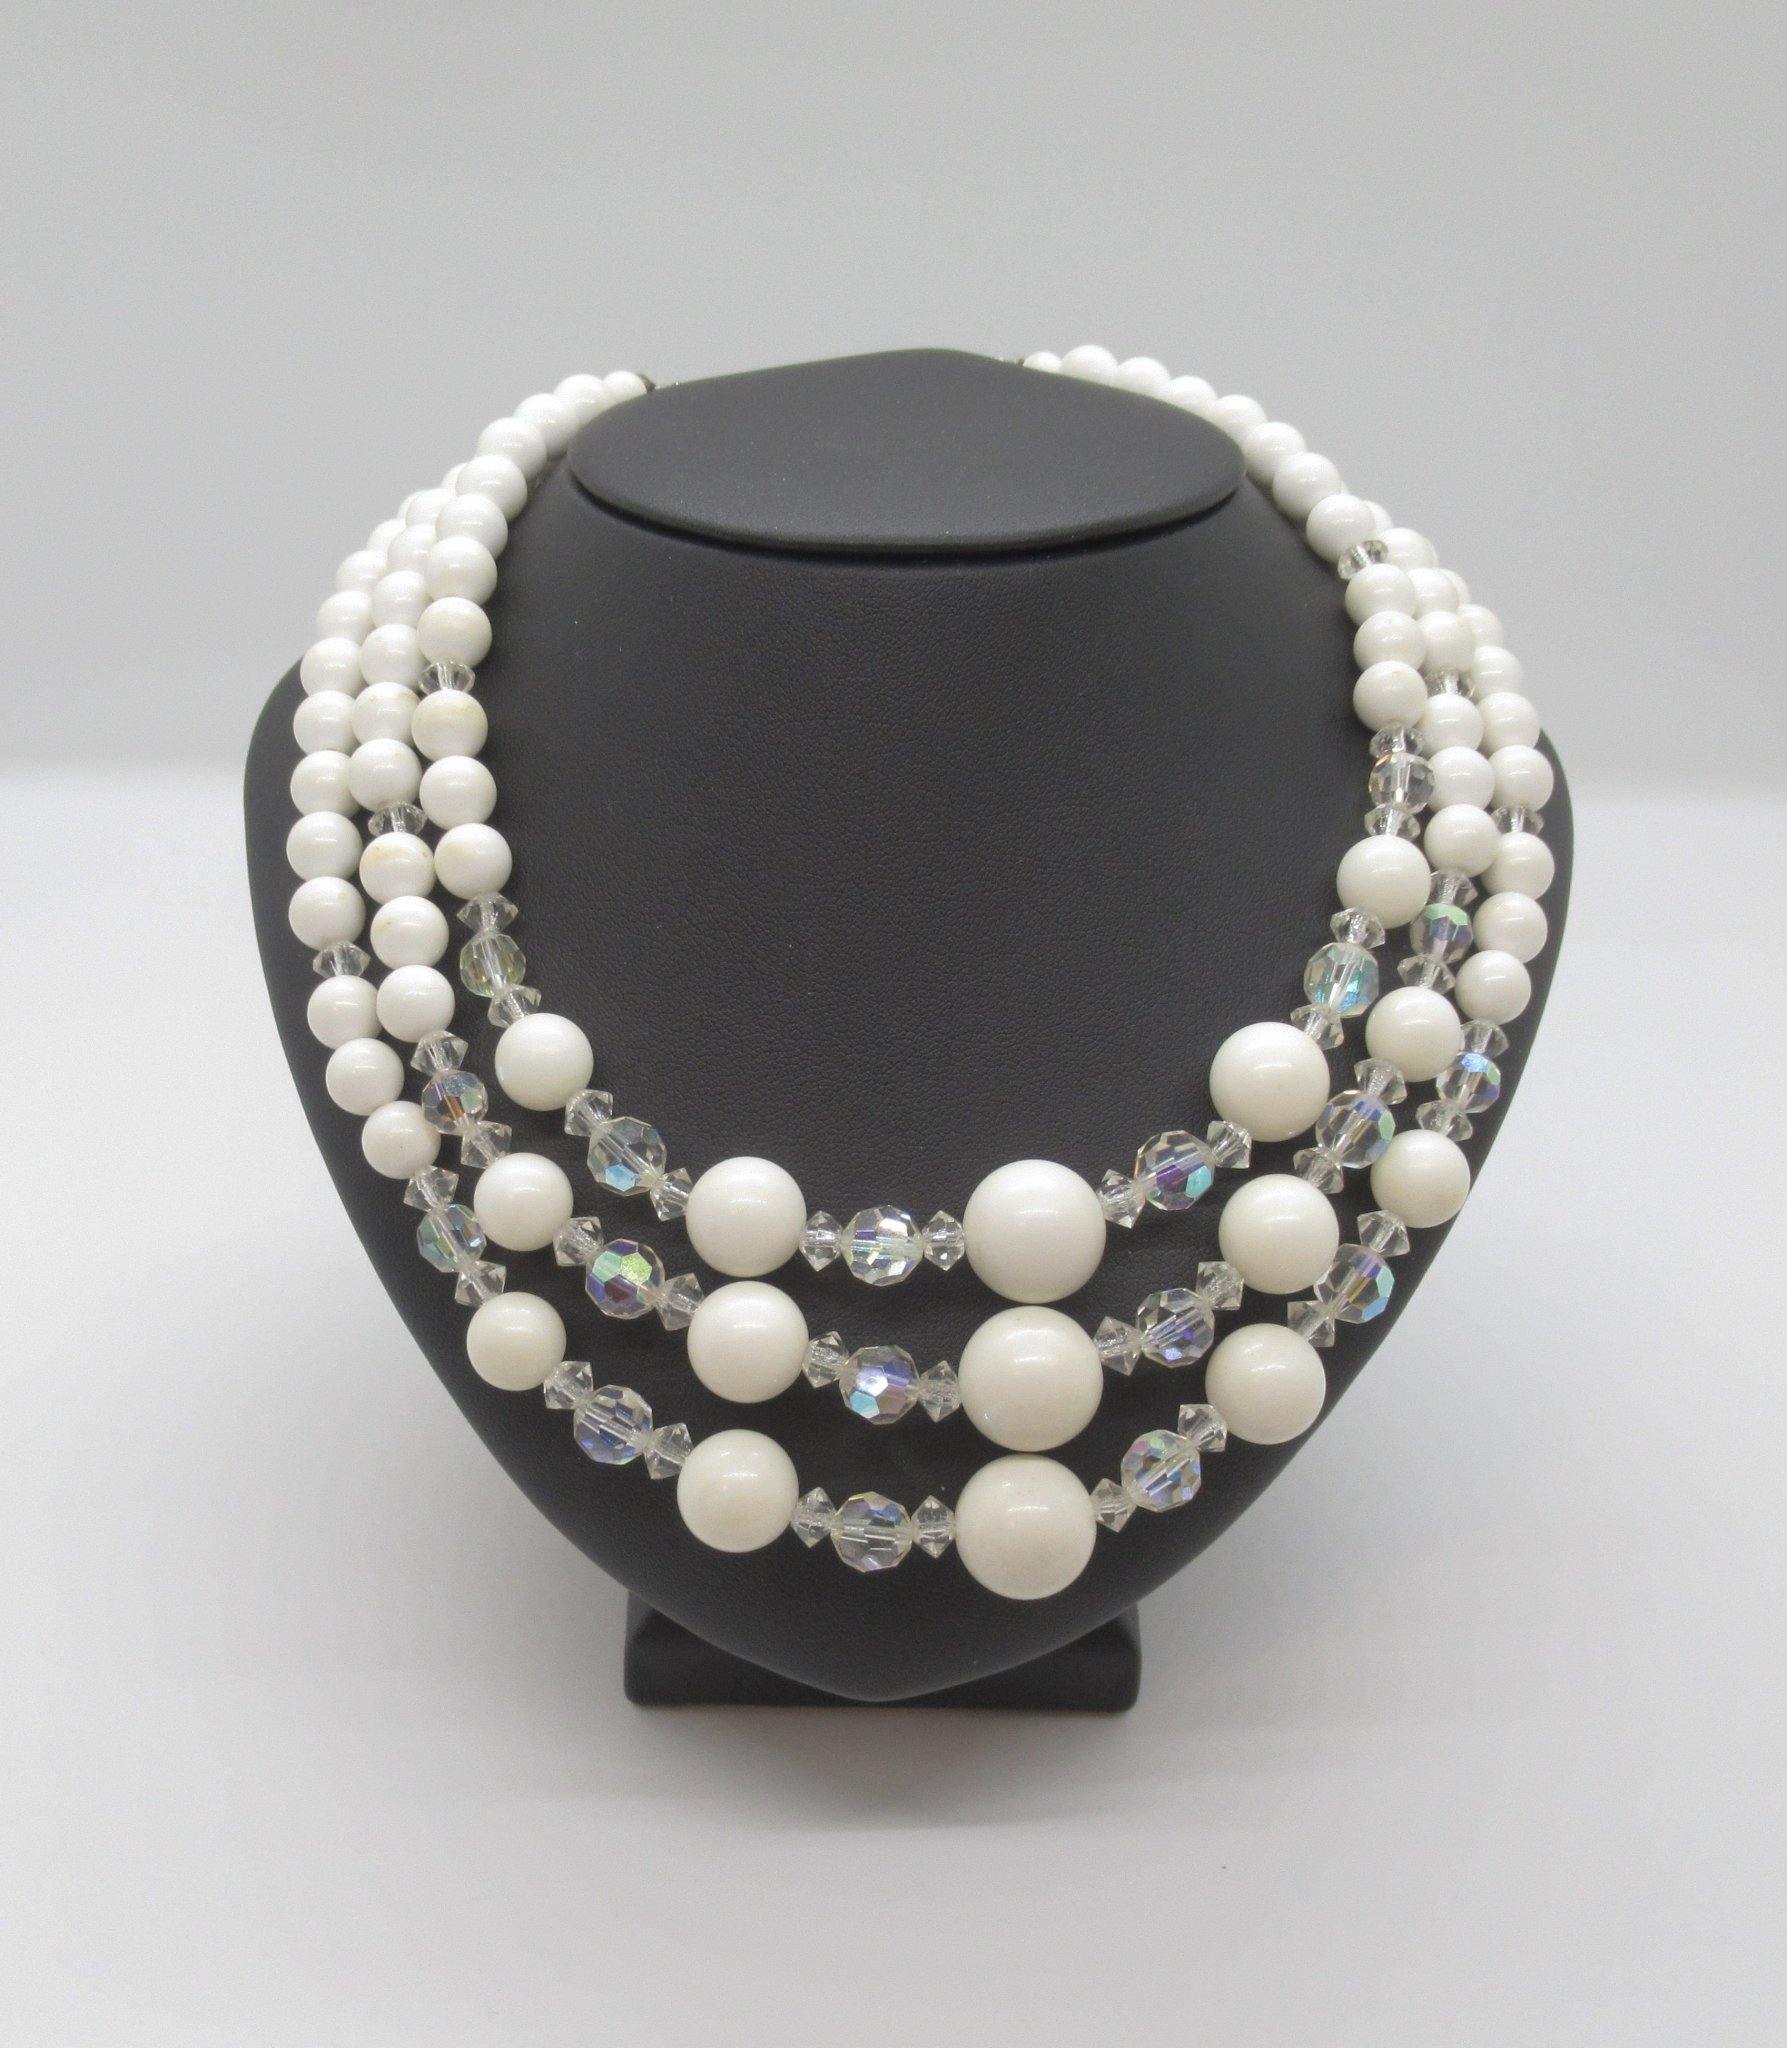 Vintage White Bead Triple Strand Necklace, with Aurora Borealis - Lamoree’s Vintage